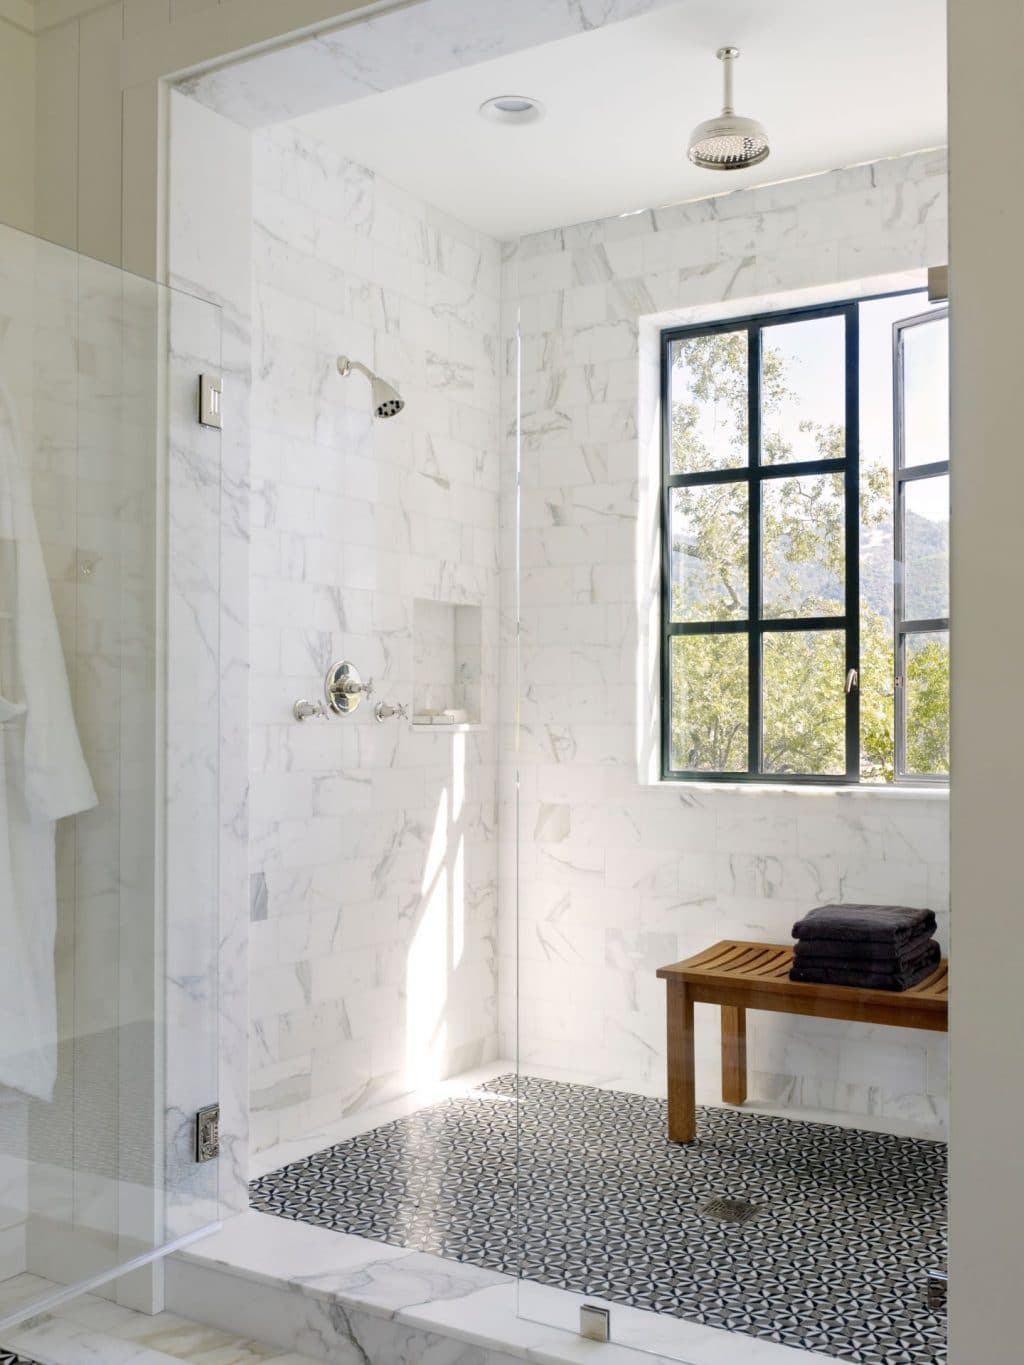 Master-Bathroom-Shower-Window-Inspiration Our Master Bathroom Ideas | Interior Design, Sources and Inspiration